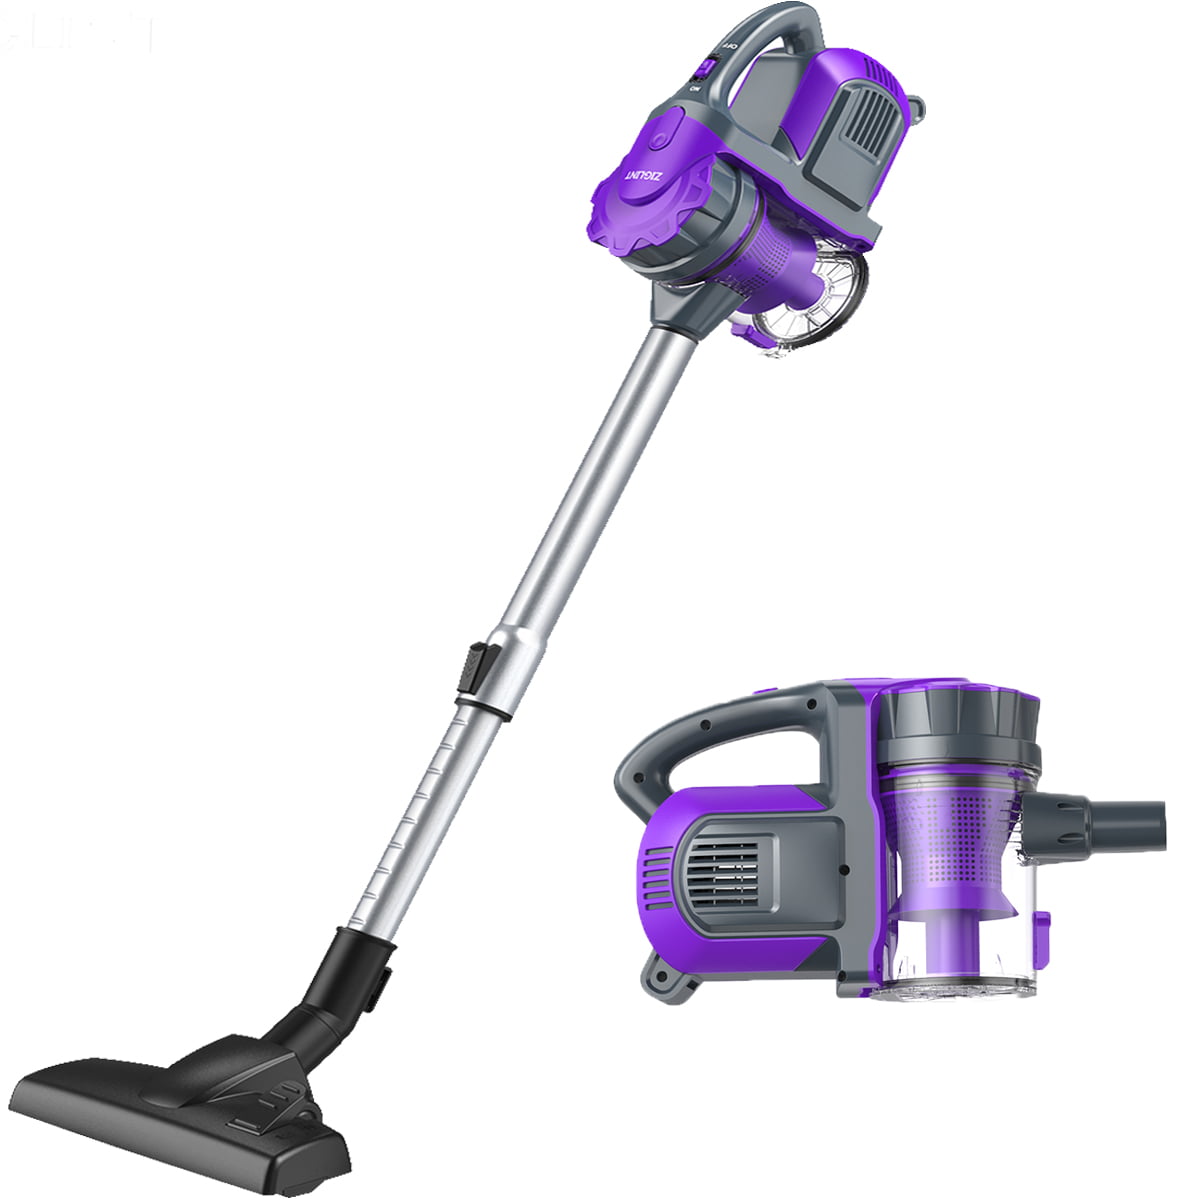 Cordless vacuum cleaner r10 pro. Пылесос 2 in 1 Vacuum Cleaner. Пылесос 2 турбины. Пылесос LG палка. Deerma vc811 Handheld Cordless Vacuum Cleaner for Home & car (9000pa).